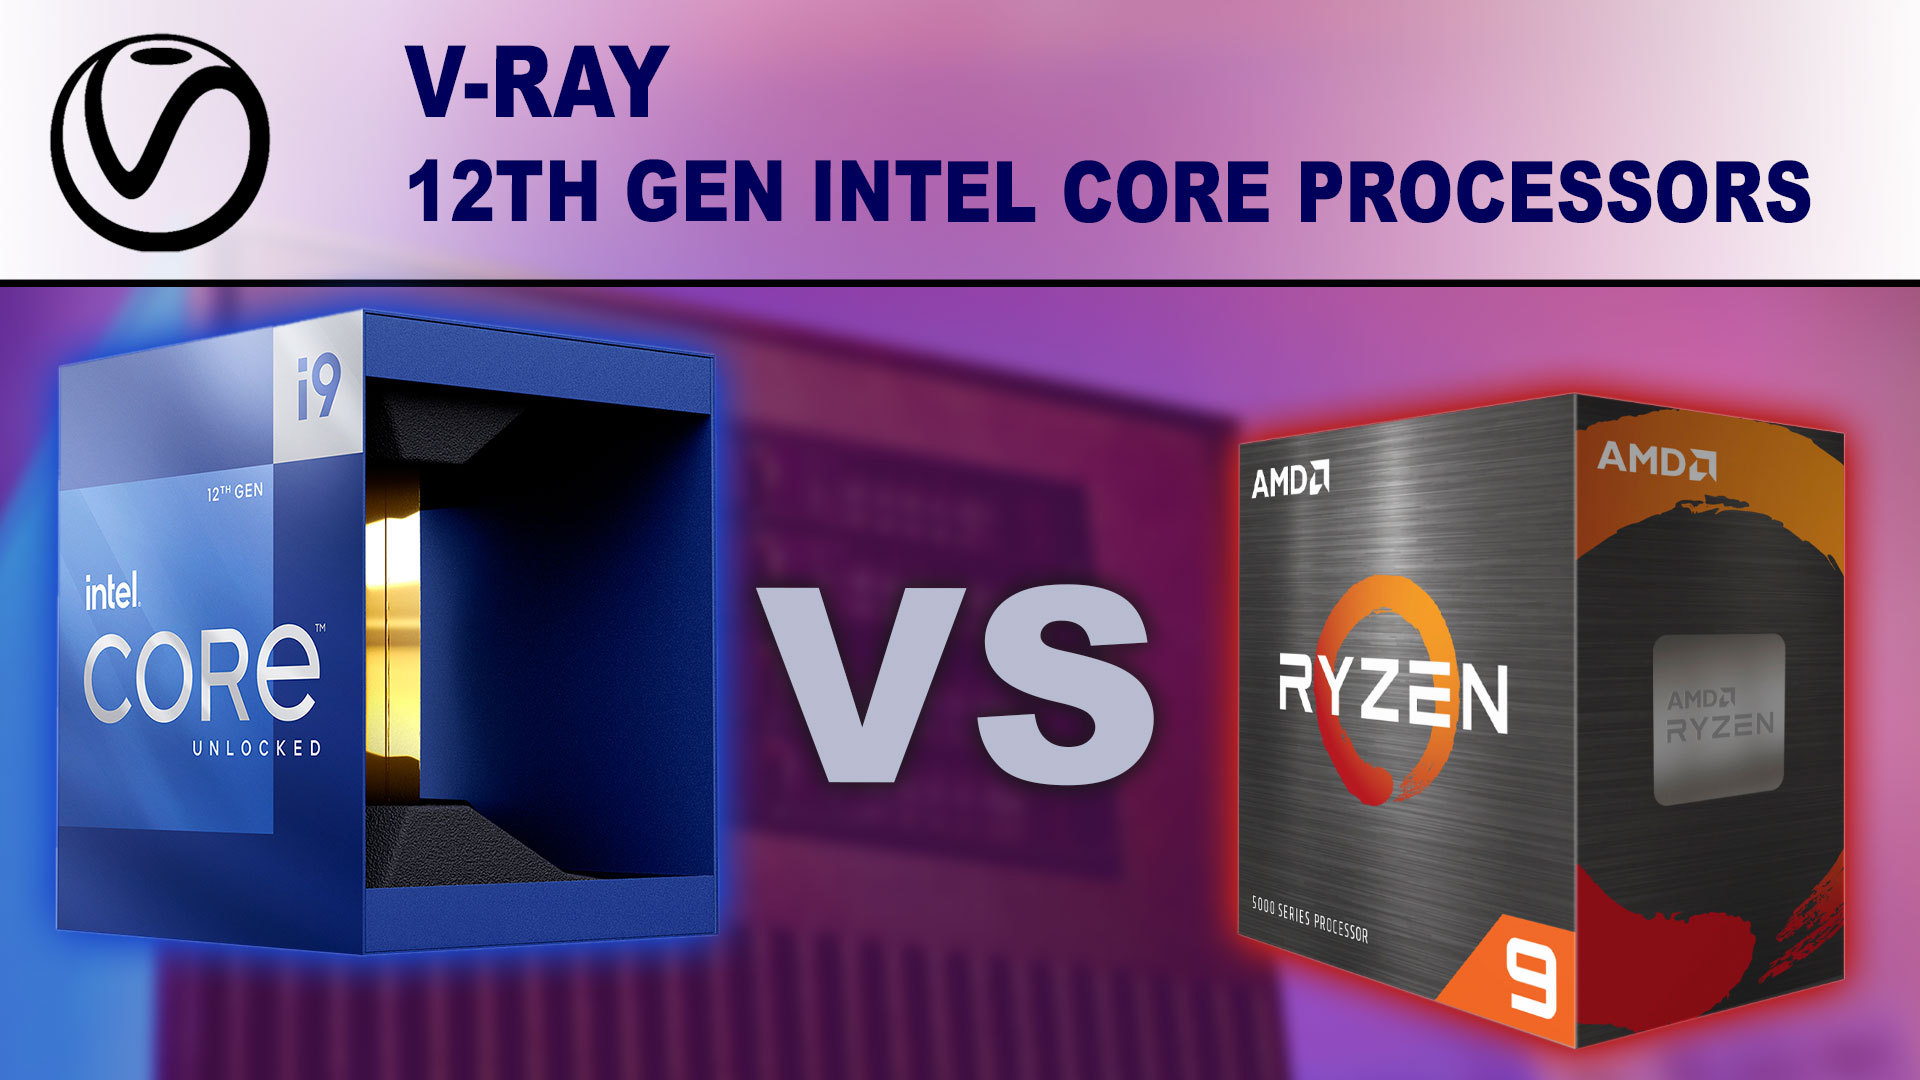 12th Gen Intel Core Processors for V-Ray